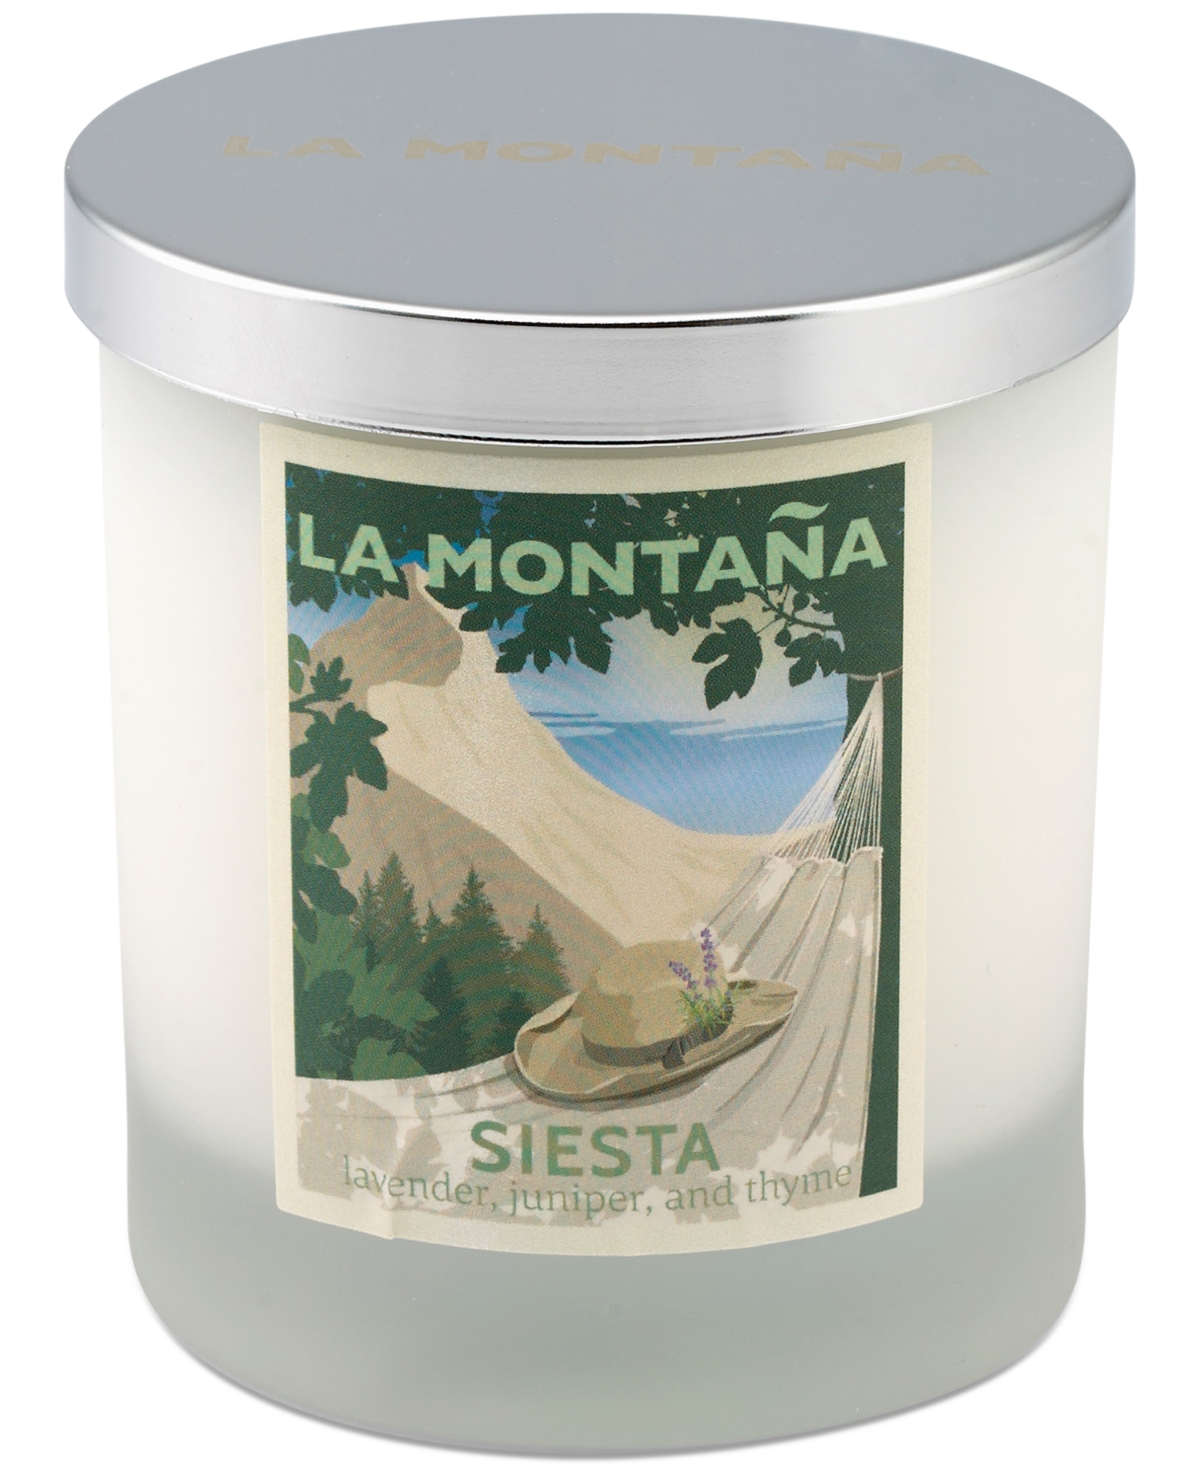 La Montana Siesta Scented Candle, 8 oz.